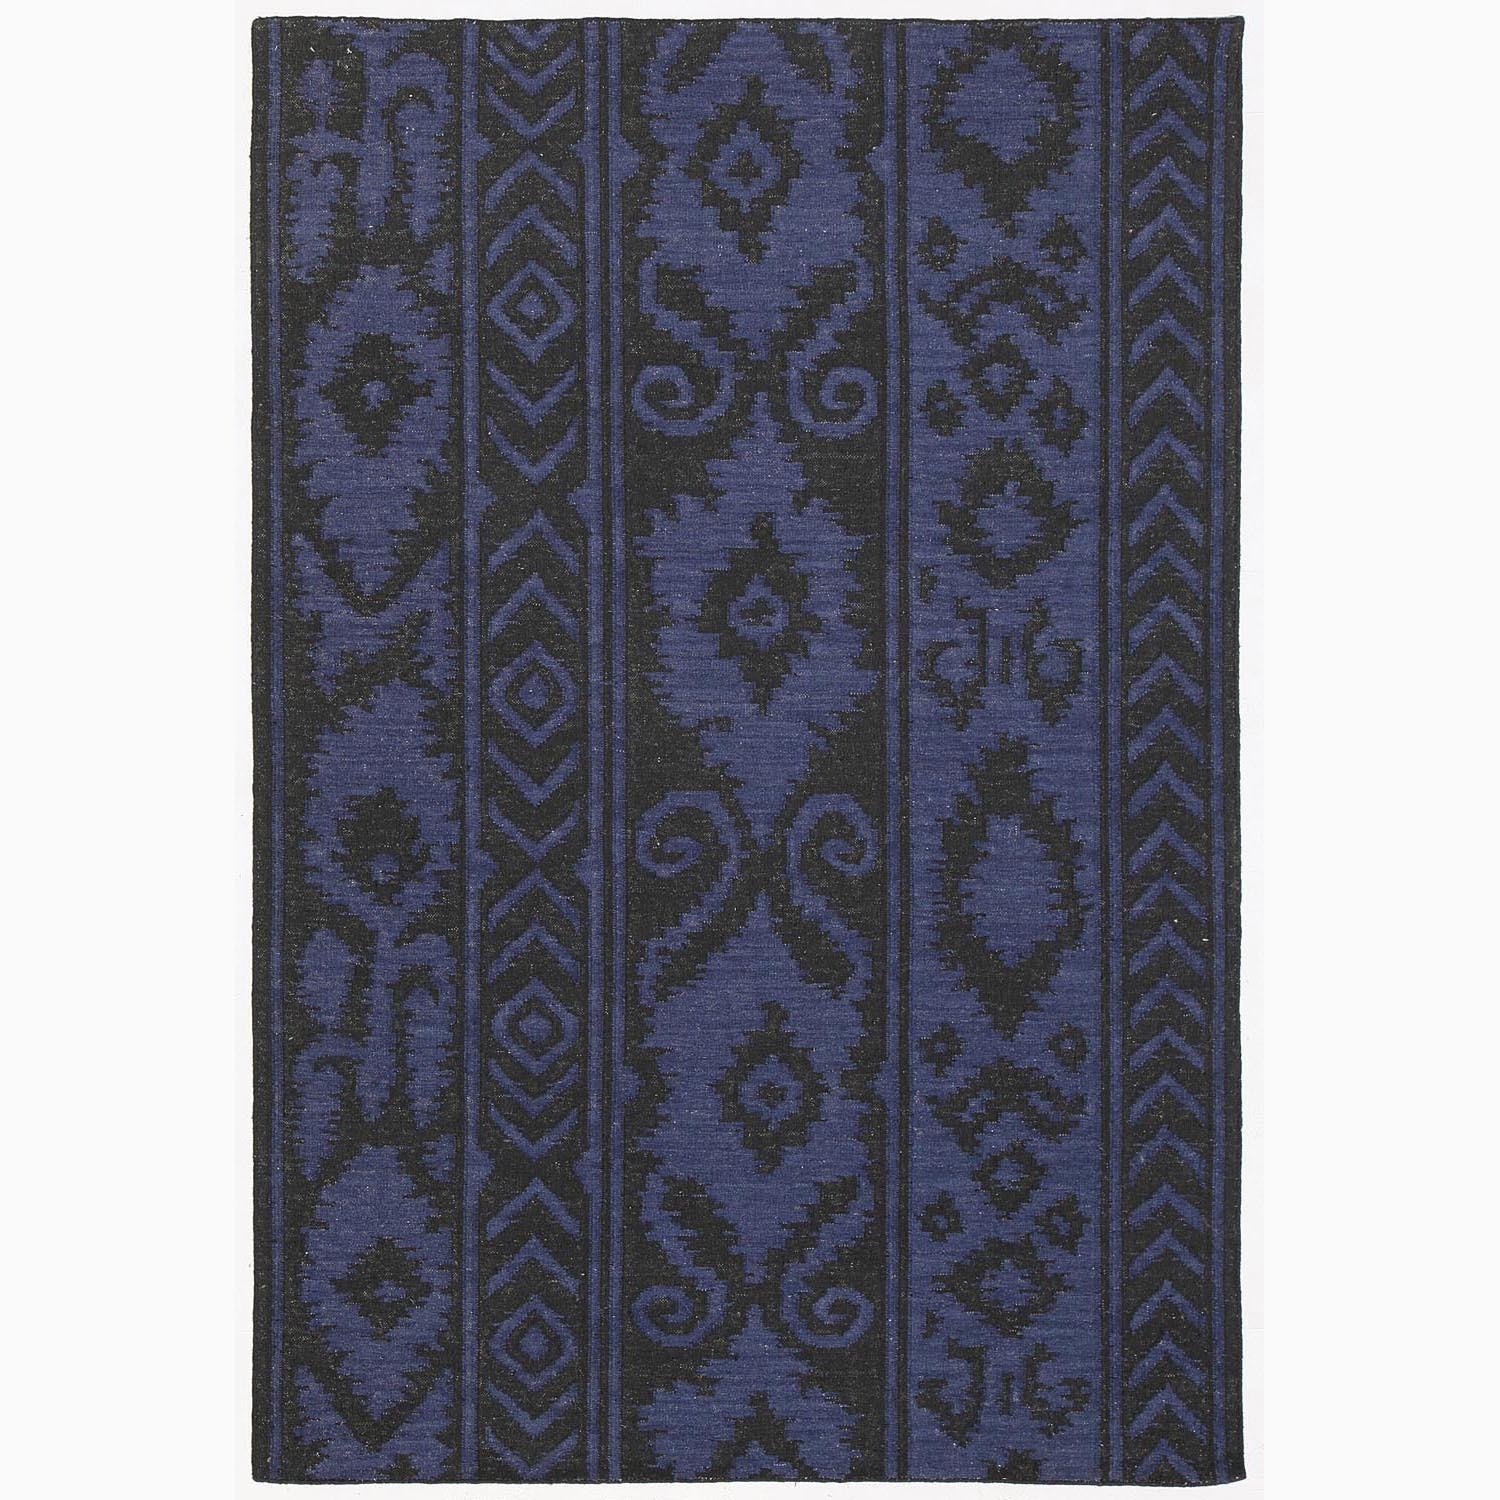 Handmade Tribal Pattern Blue/ Black Wool Rug (8 X 10)